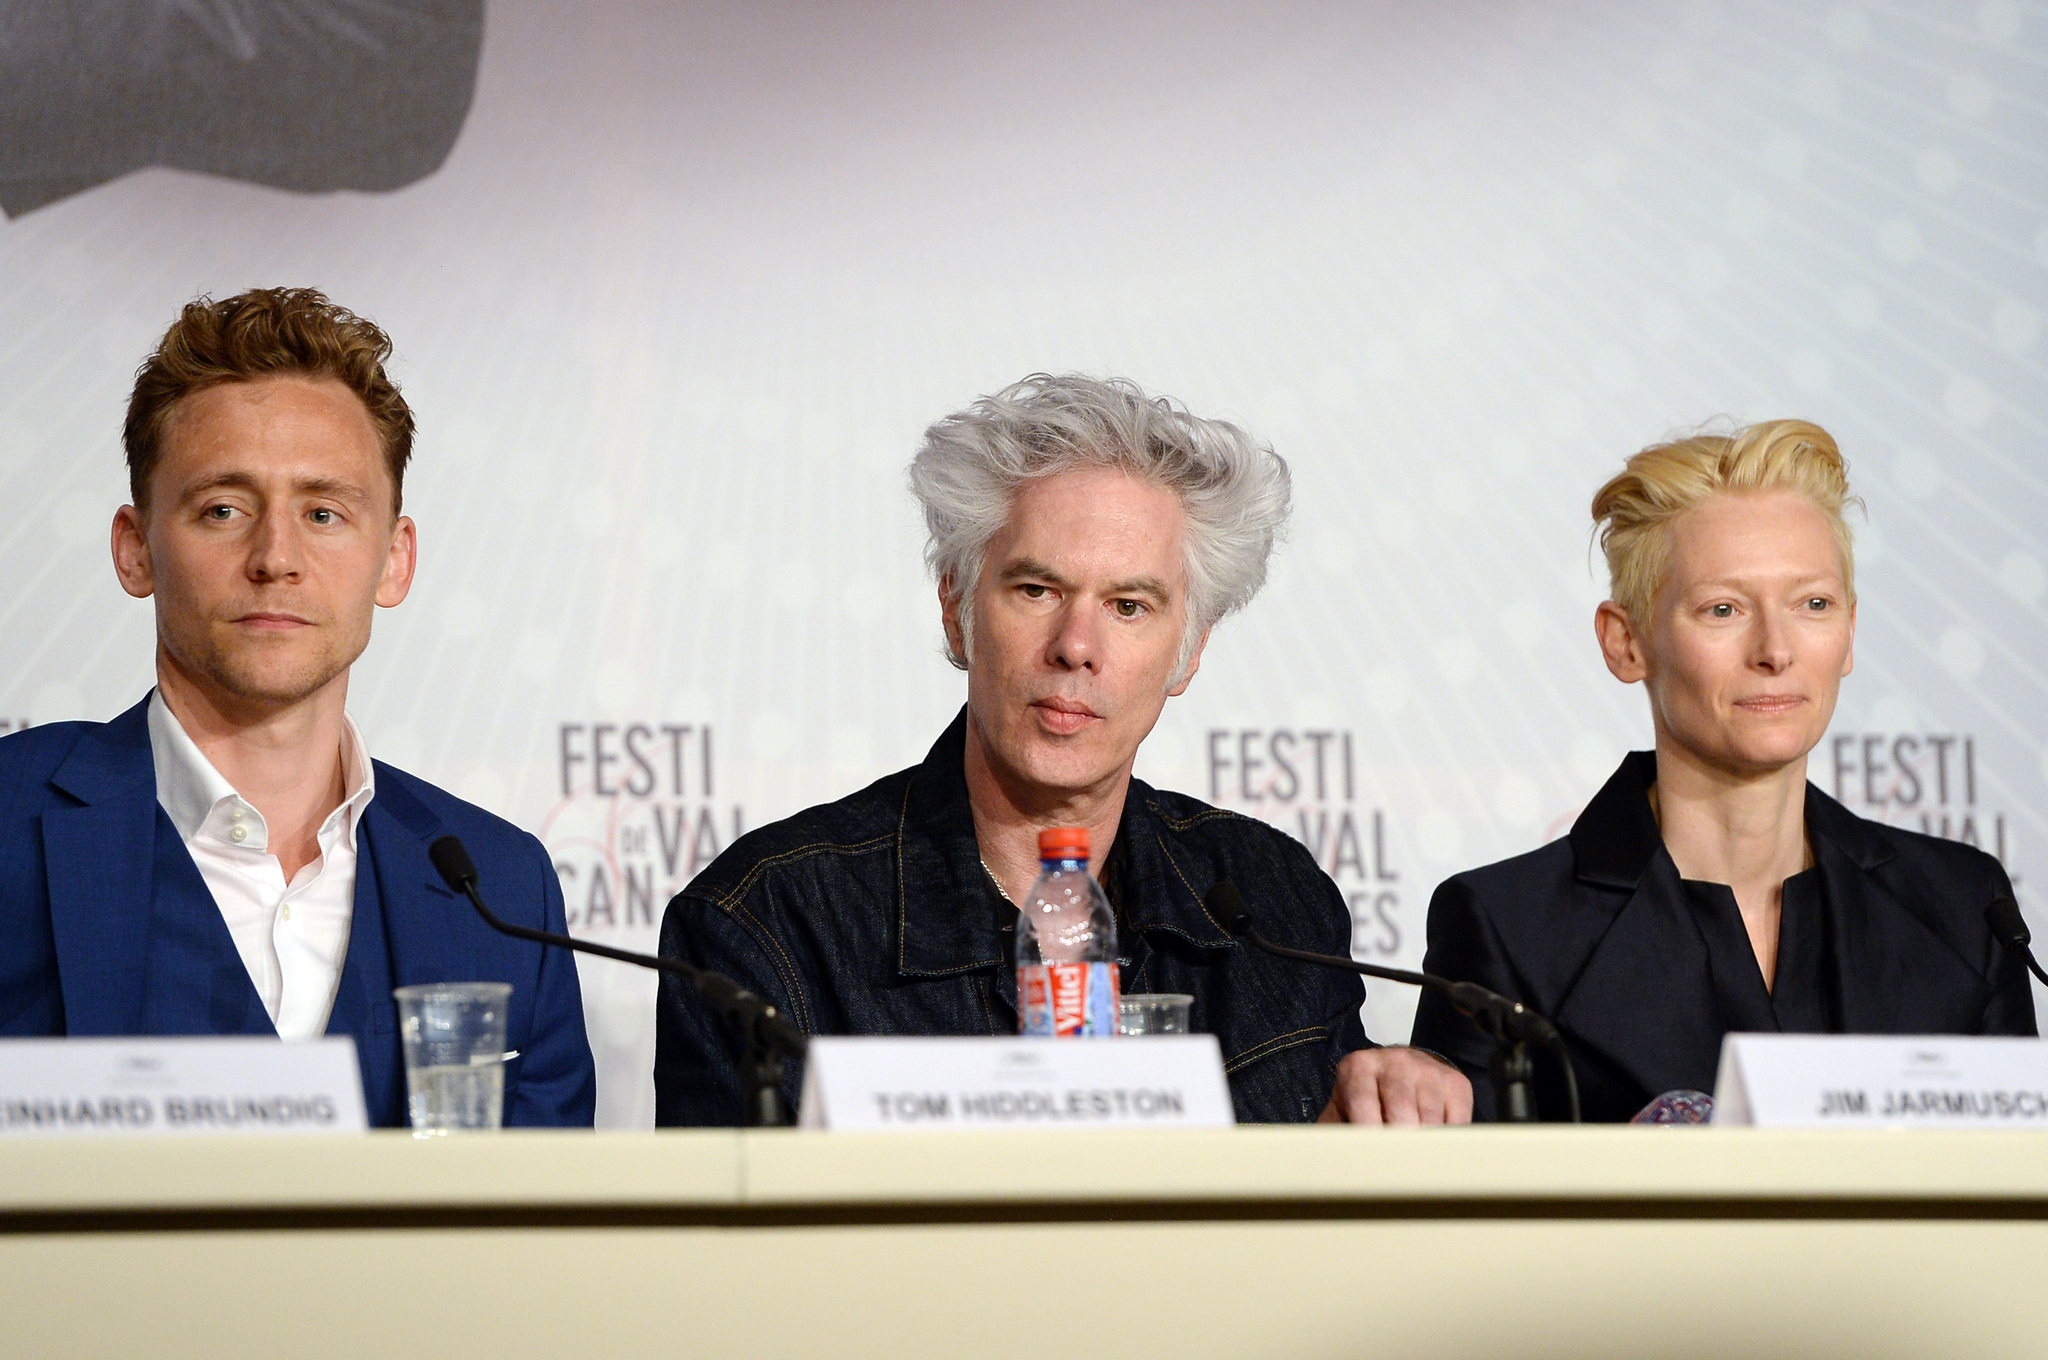 Jim Jarmusch, Tilda Swinton and Tom Hiddleston at event of Isgyvena tik mylintys (2013)